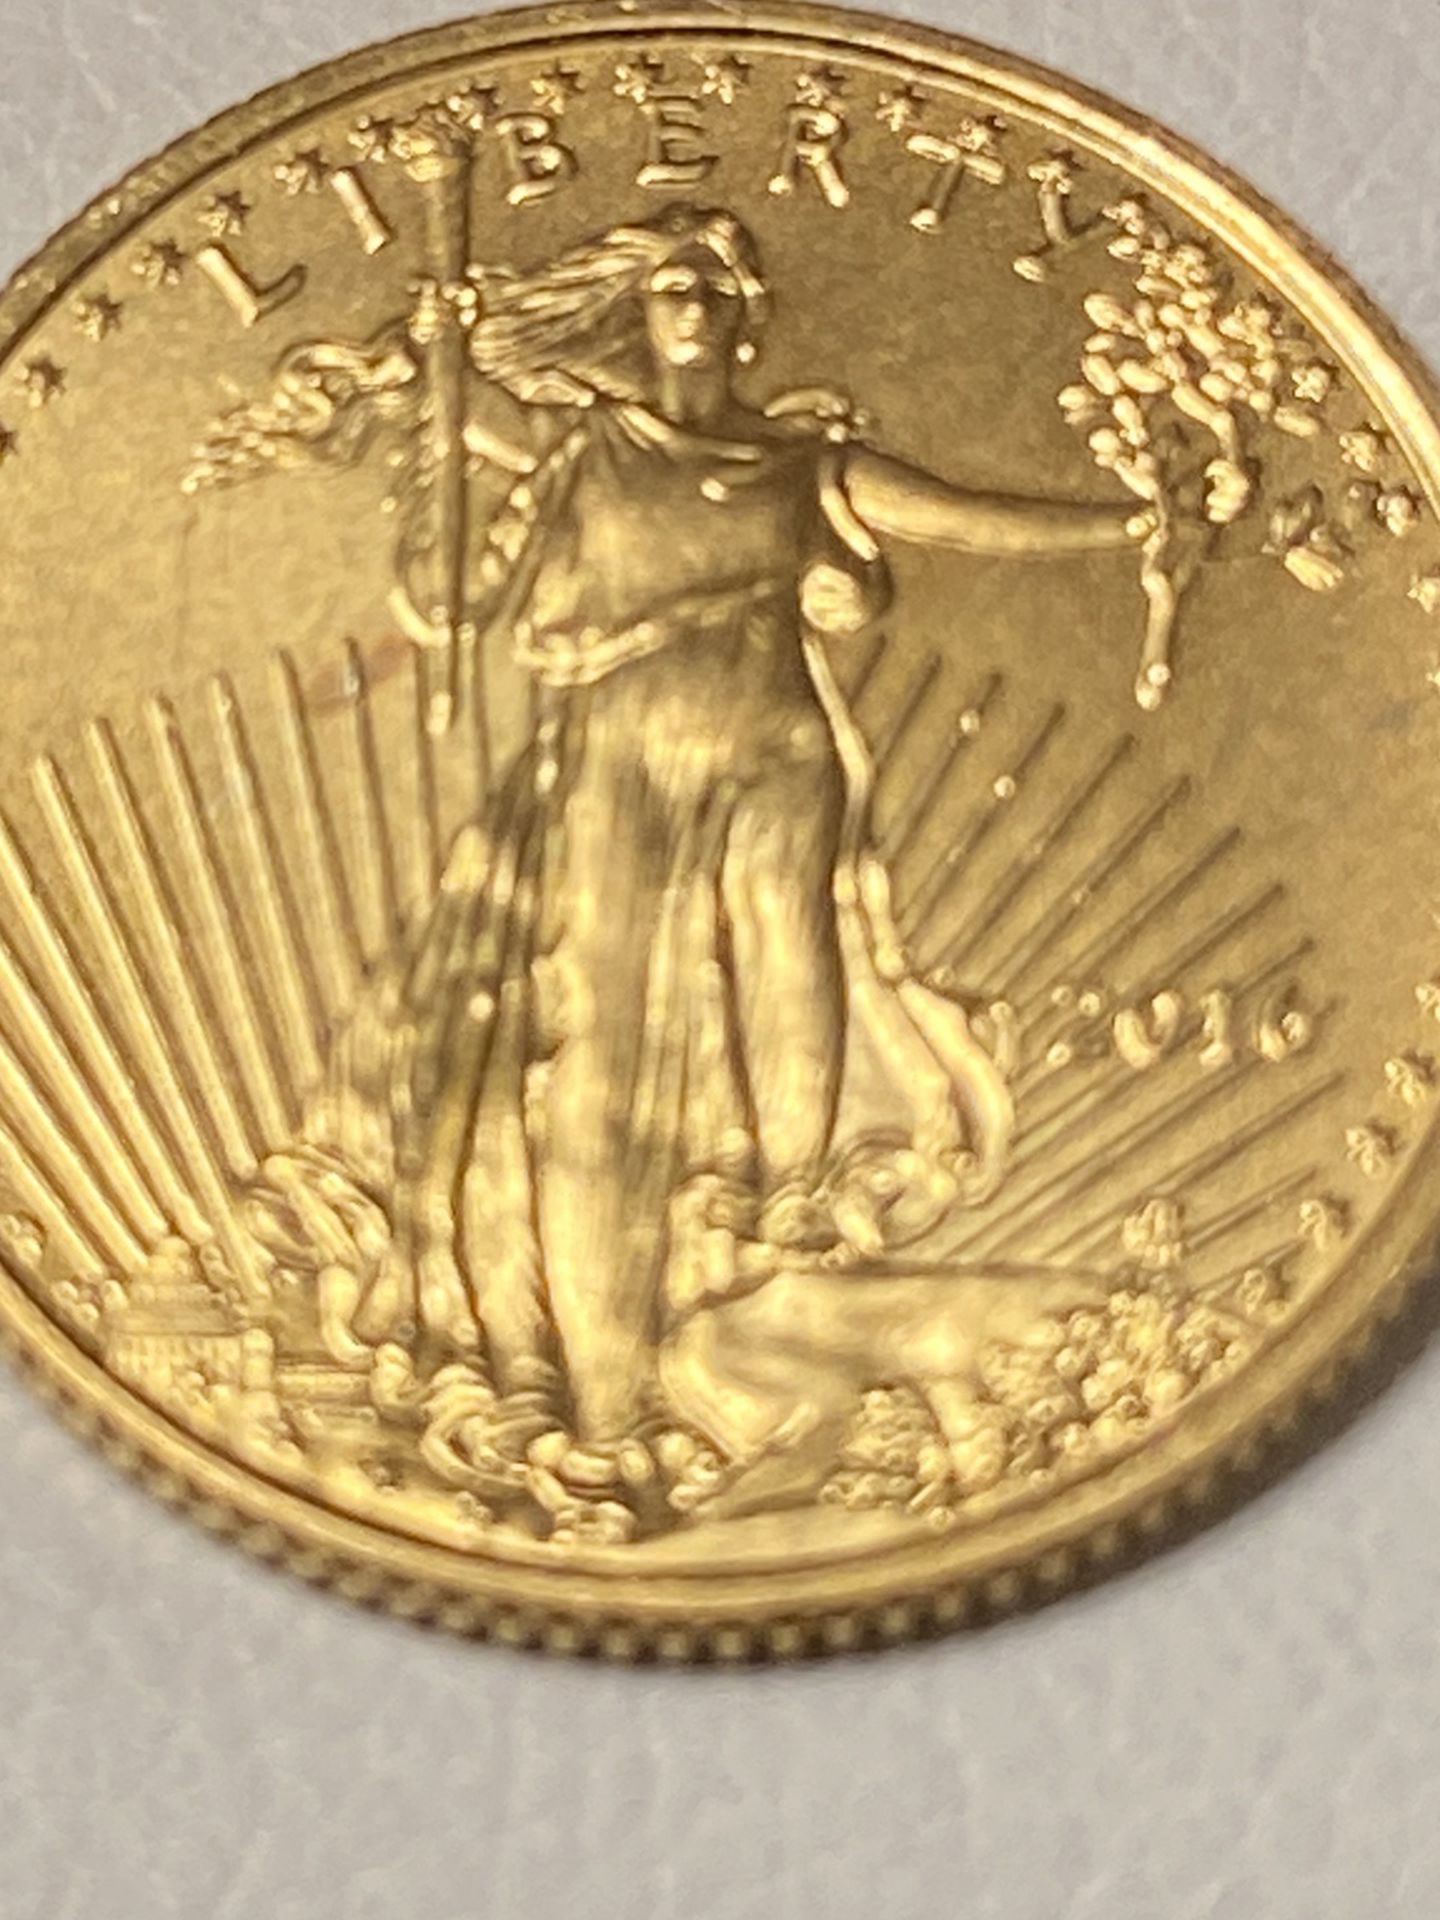 2016 - 1/10 OUNCE GOLD AMERICAN EAGLE